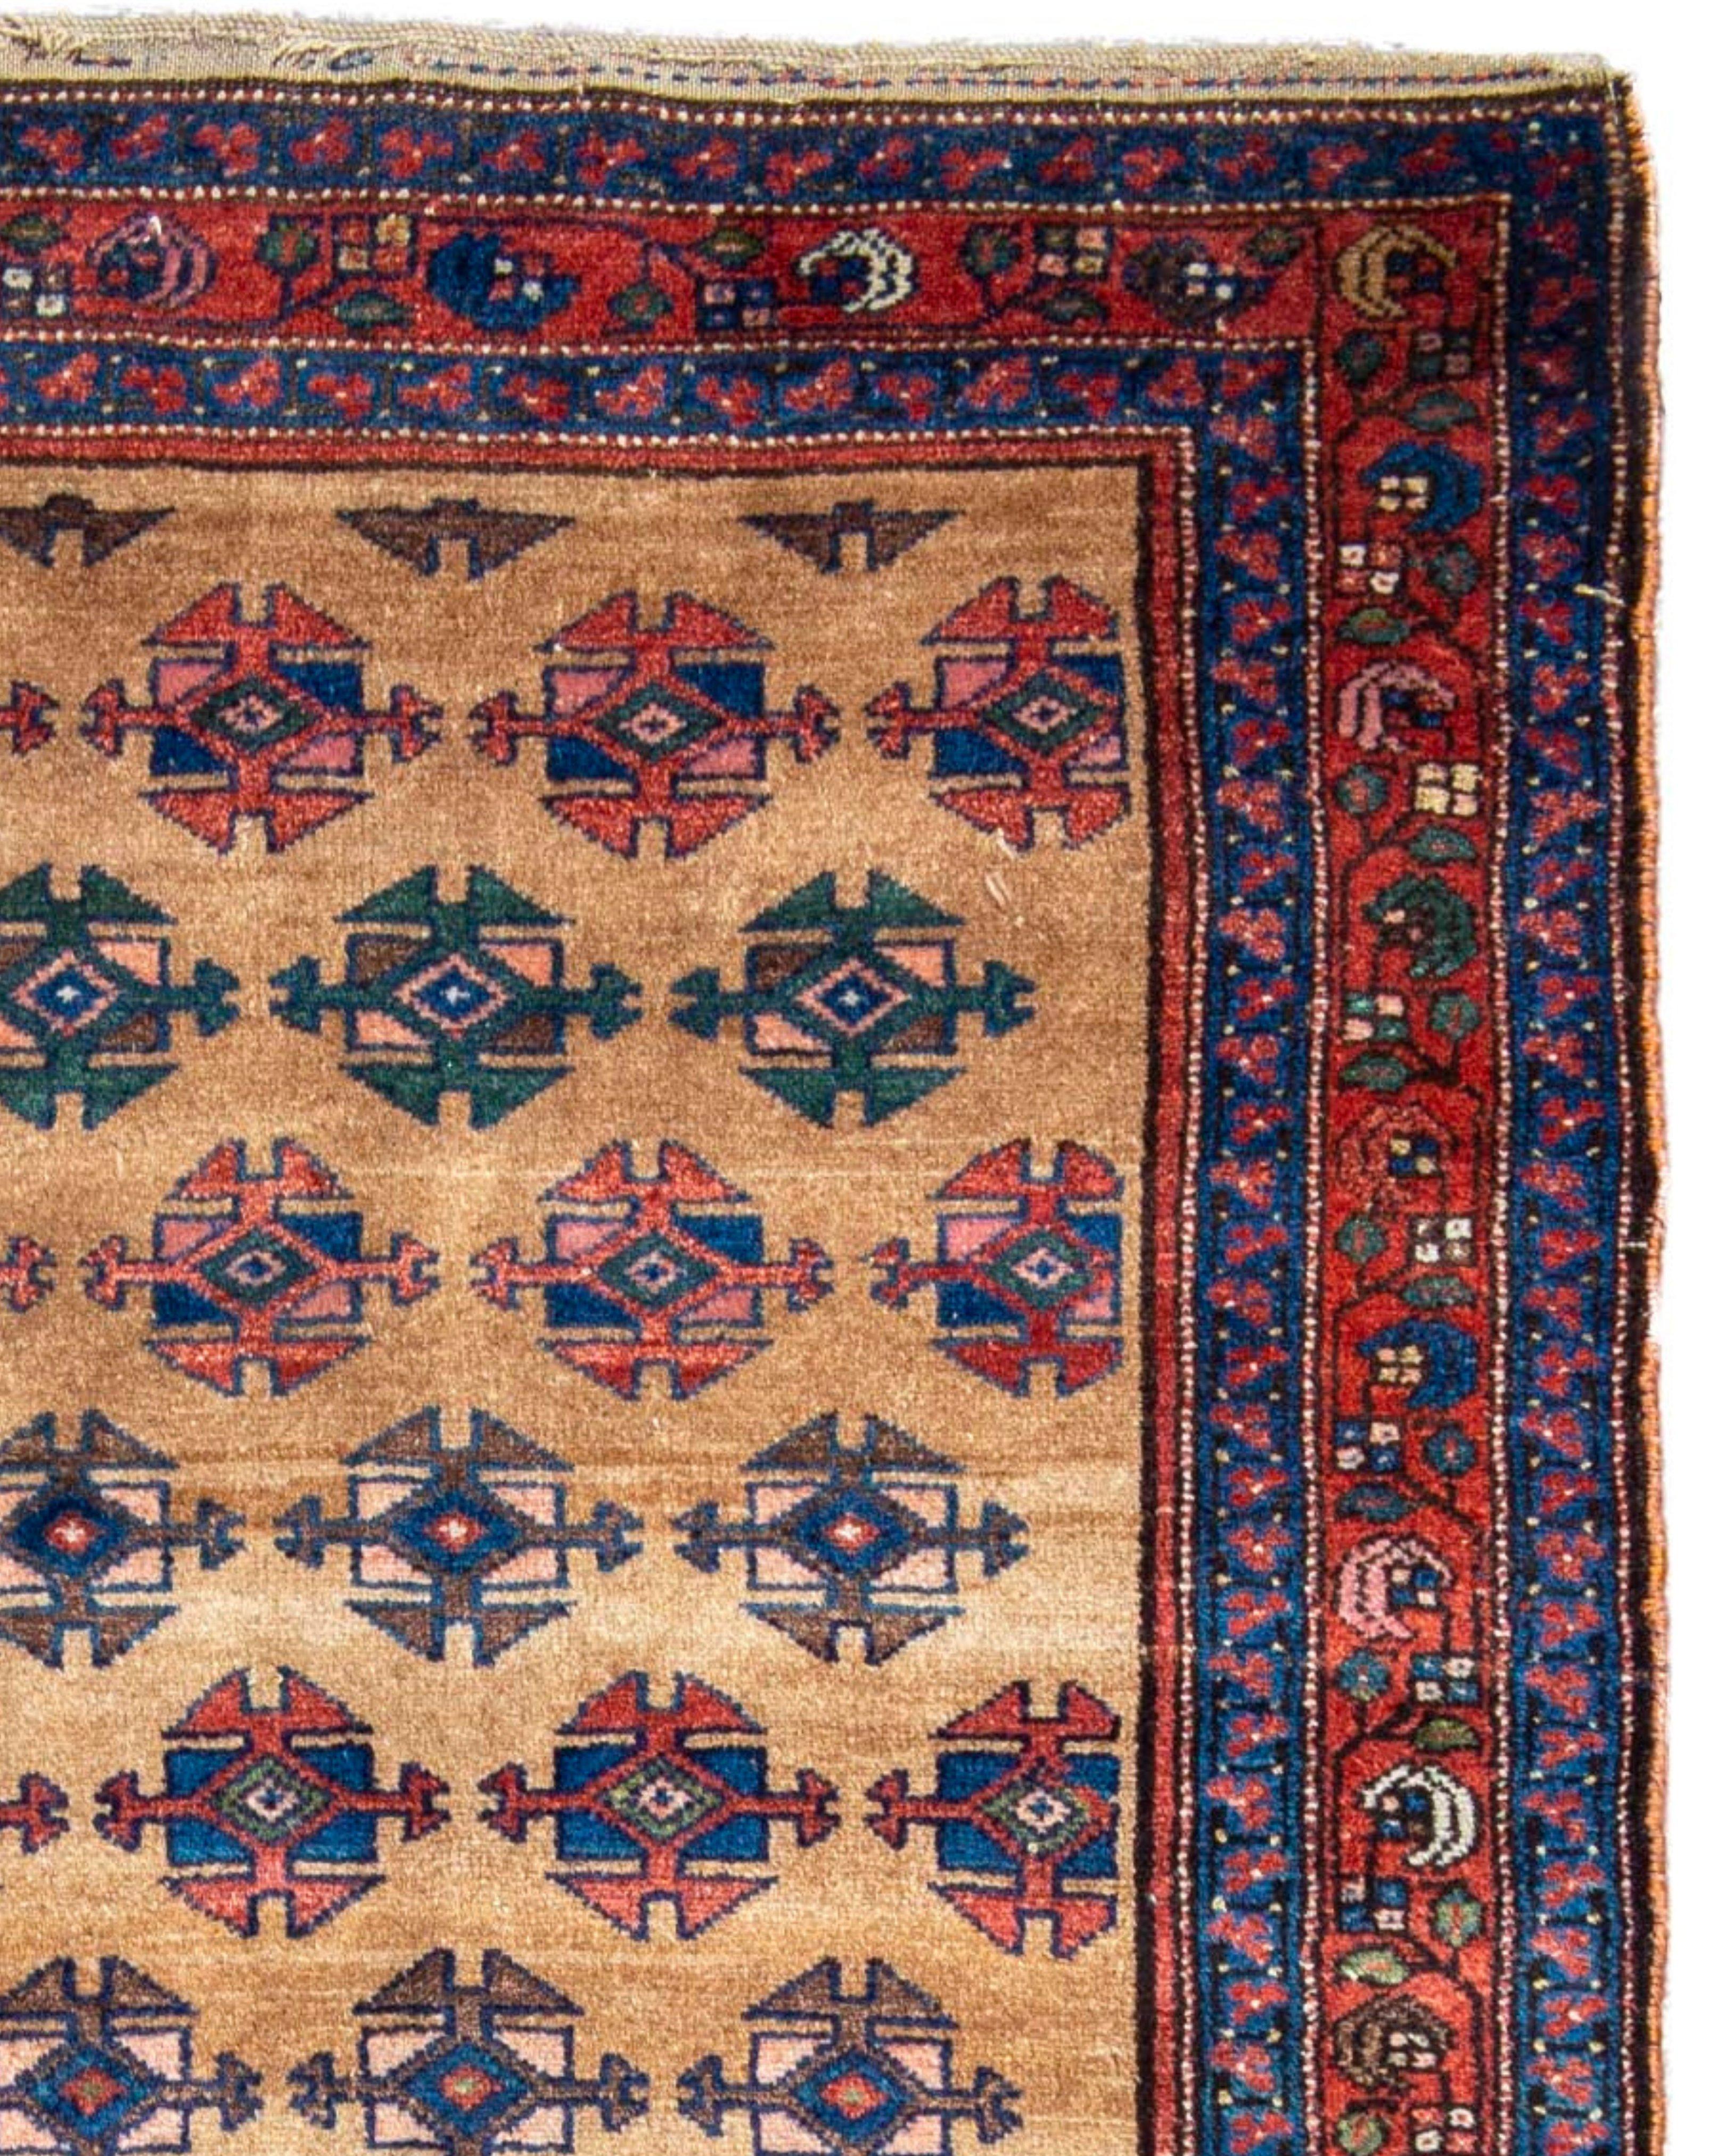 Antique Persian Kurdish Long Rug, 19th Century

Additional information:
Dimensions: 4'3